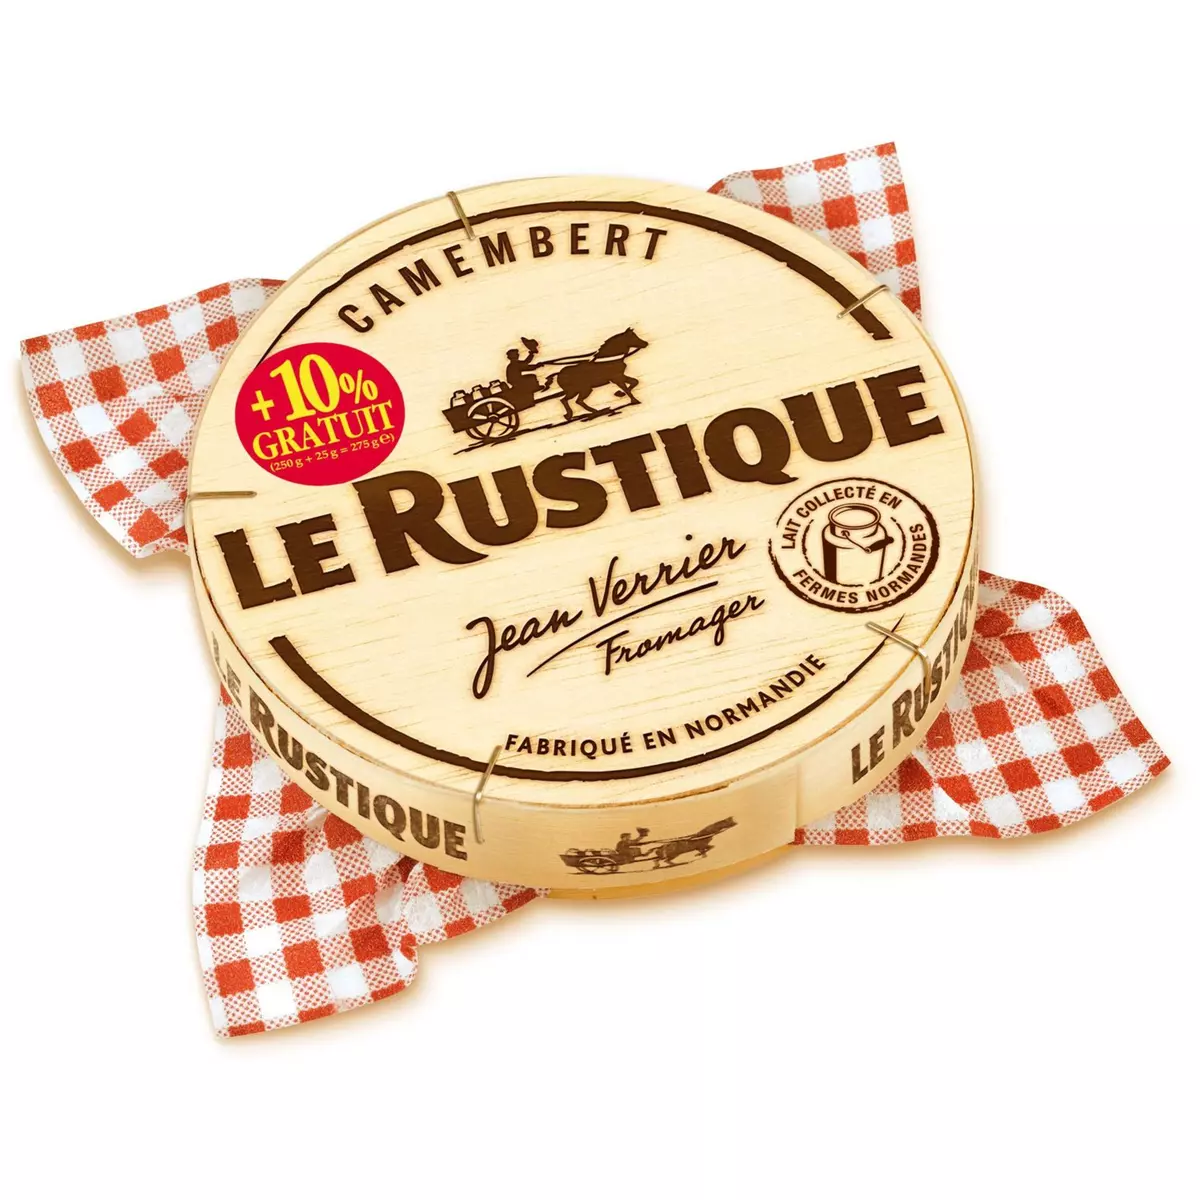 LE RUSTIQUE Camembert fabriqué en Normandie 250g +10% offert